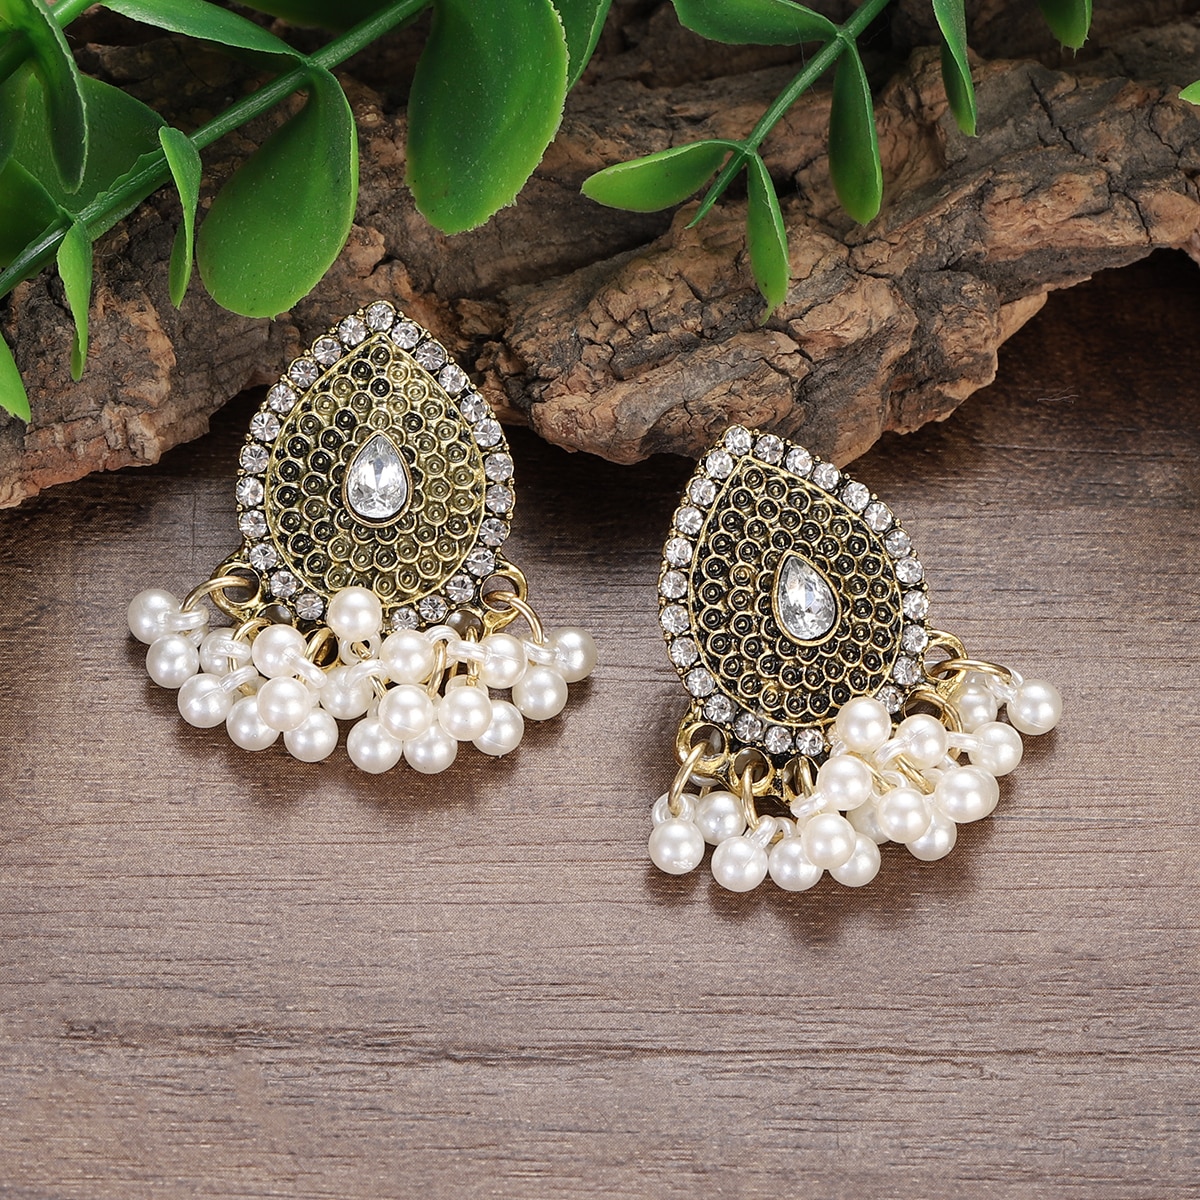 Luxury-White-CZ-Water-Drop-Earrings-For-Women-Ethnic-Vintage-Bohemian-Gold-Color-Statement-Earrings-1005004700736114-2